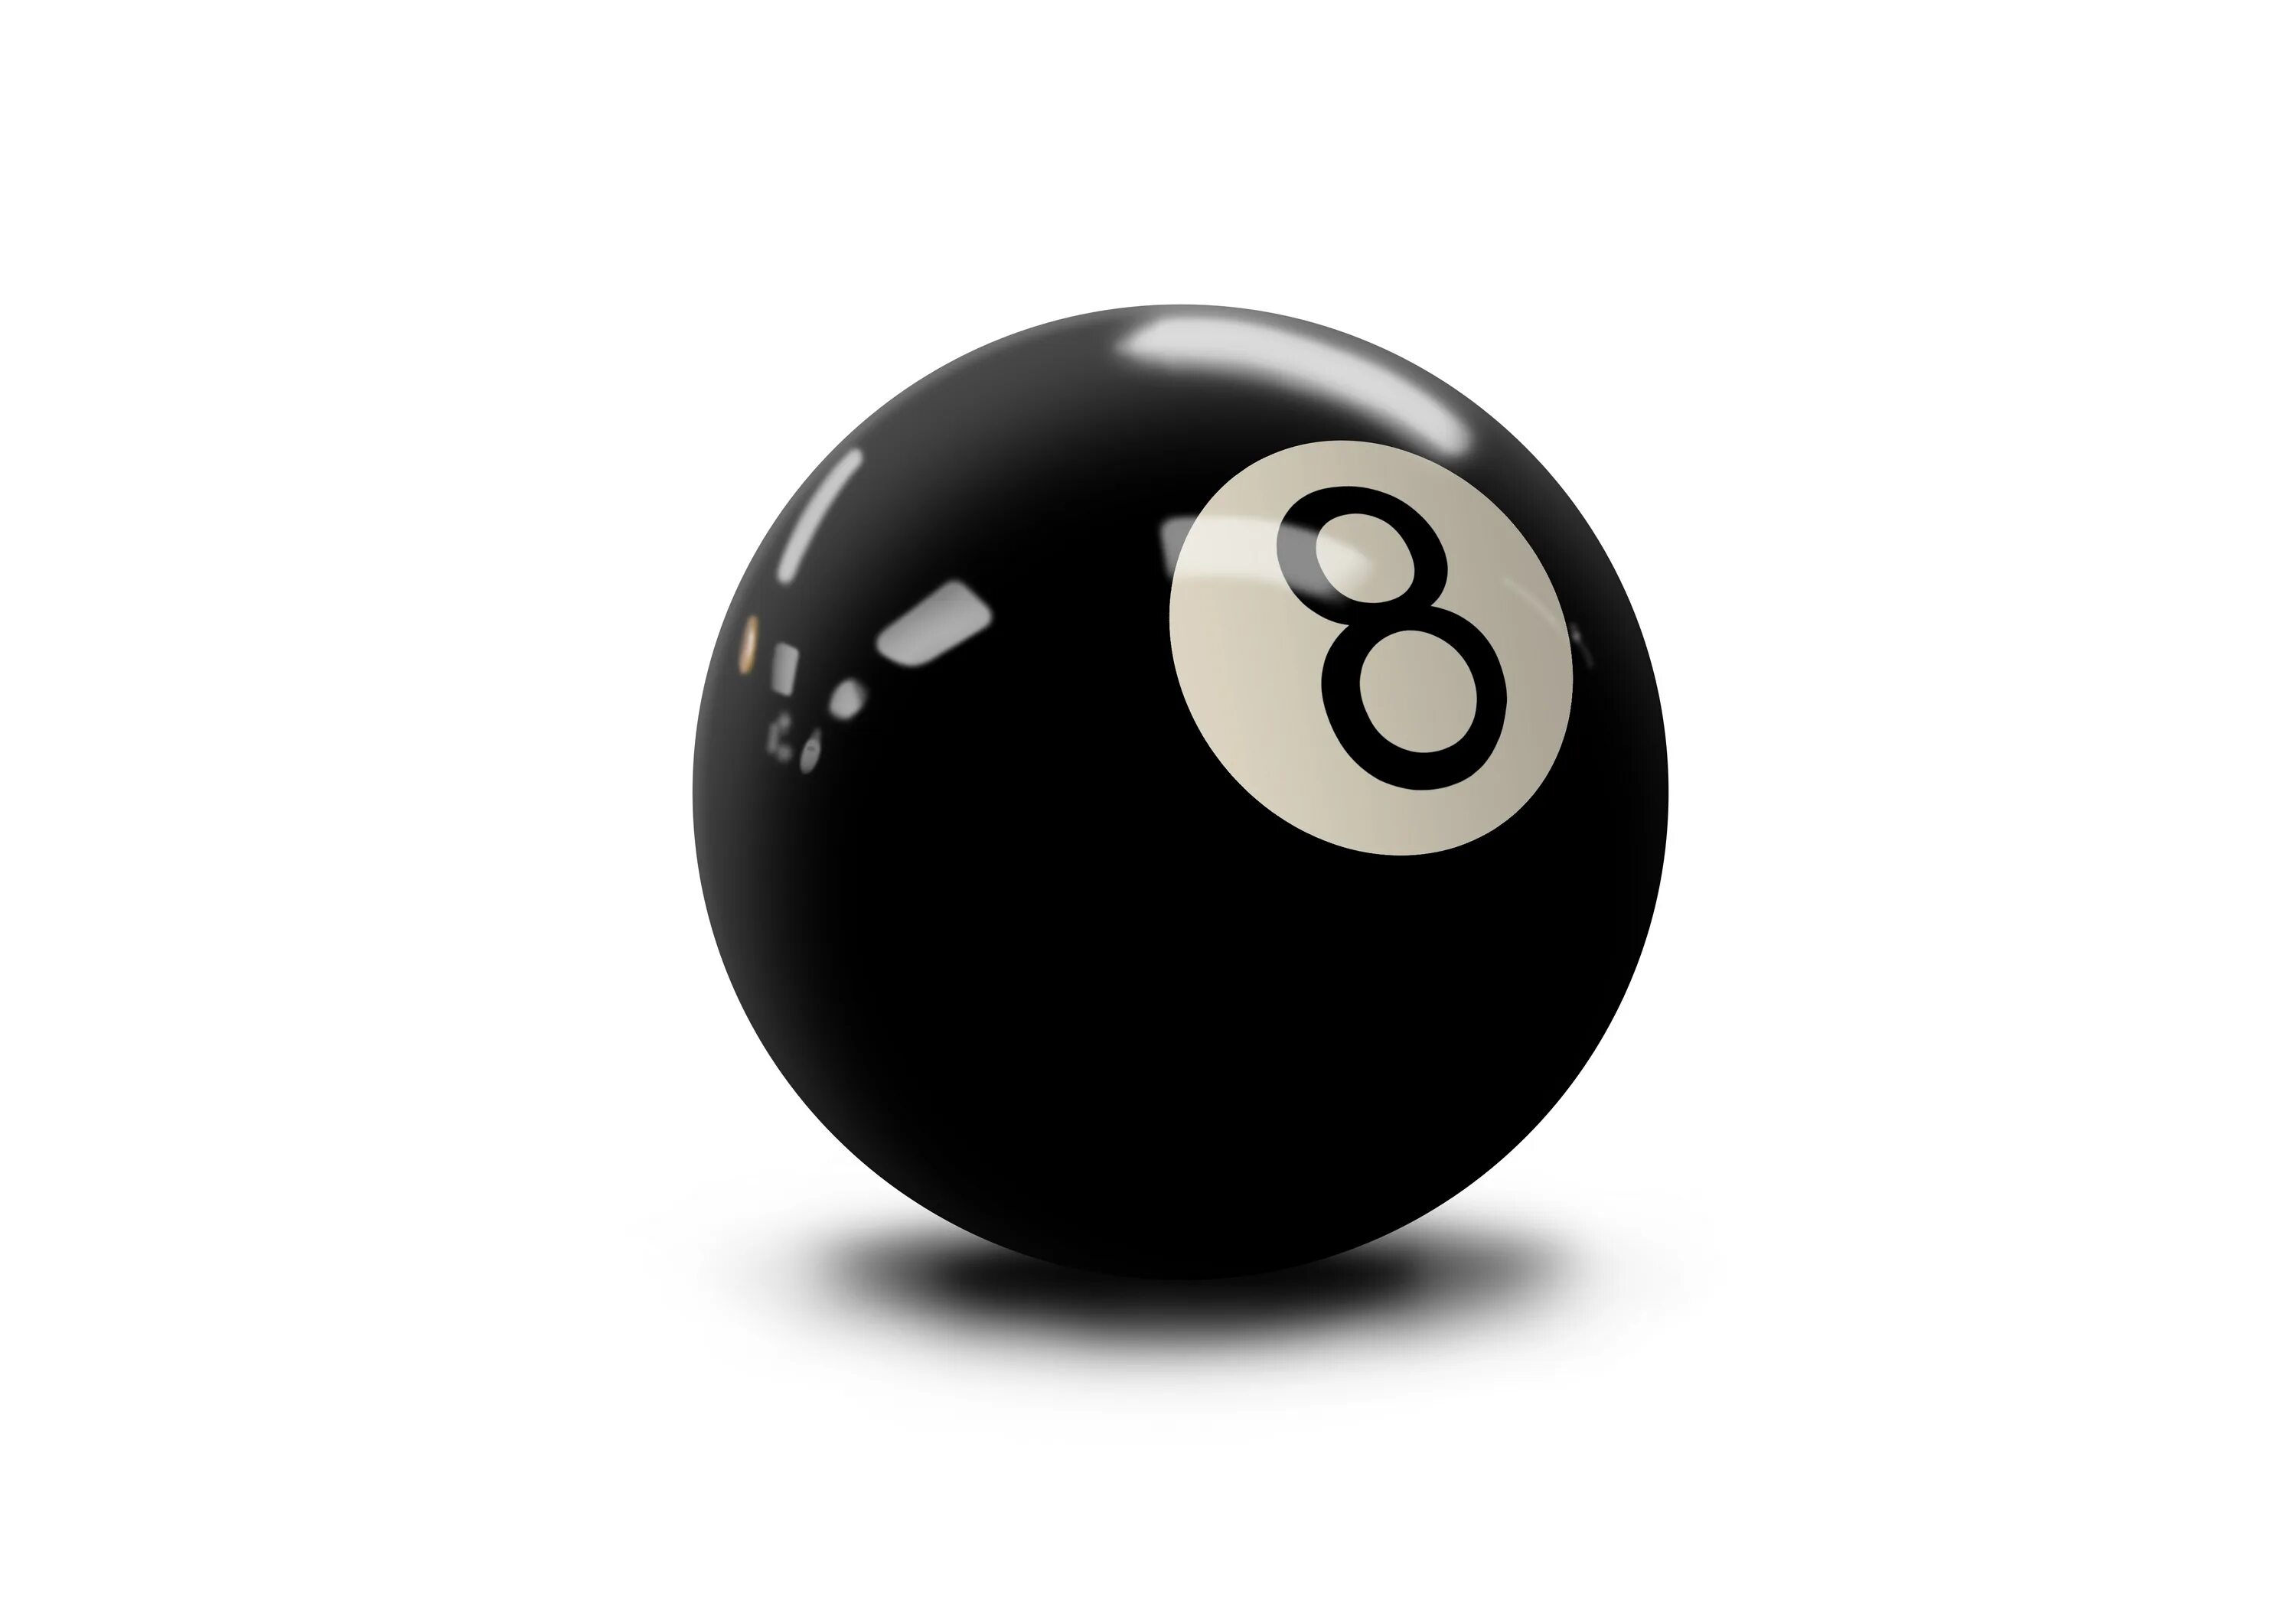 Рисунок шар 8. Шар 8 в бильярде. Бильярдный шар восьмерка. Черный бильярдный шар. Бильярдный шар с цифрой 8.